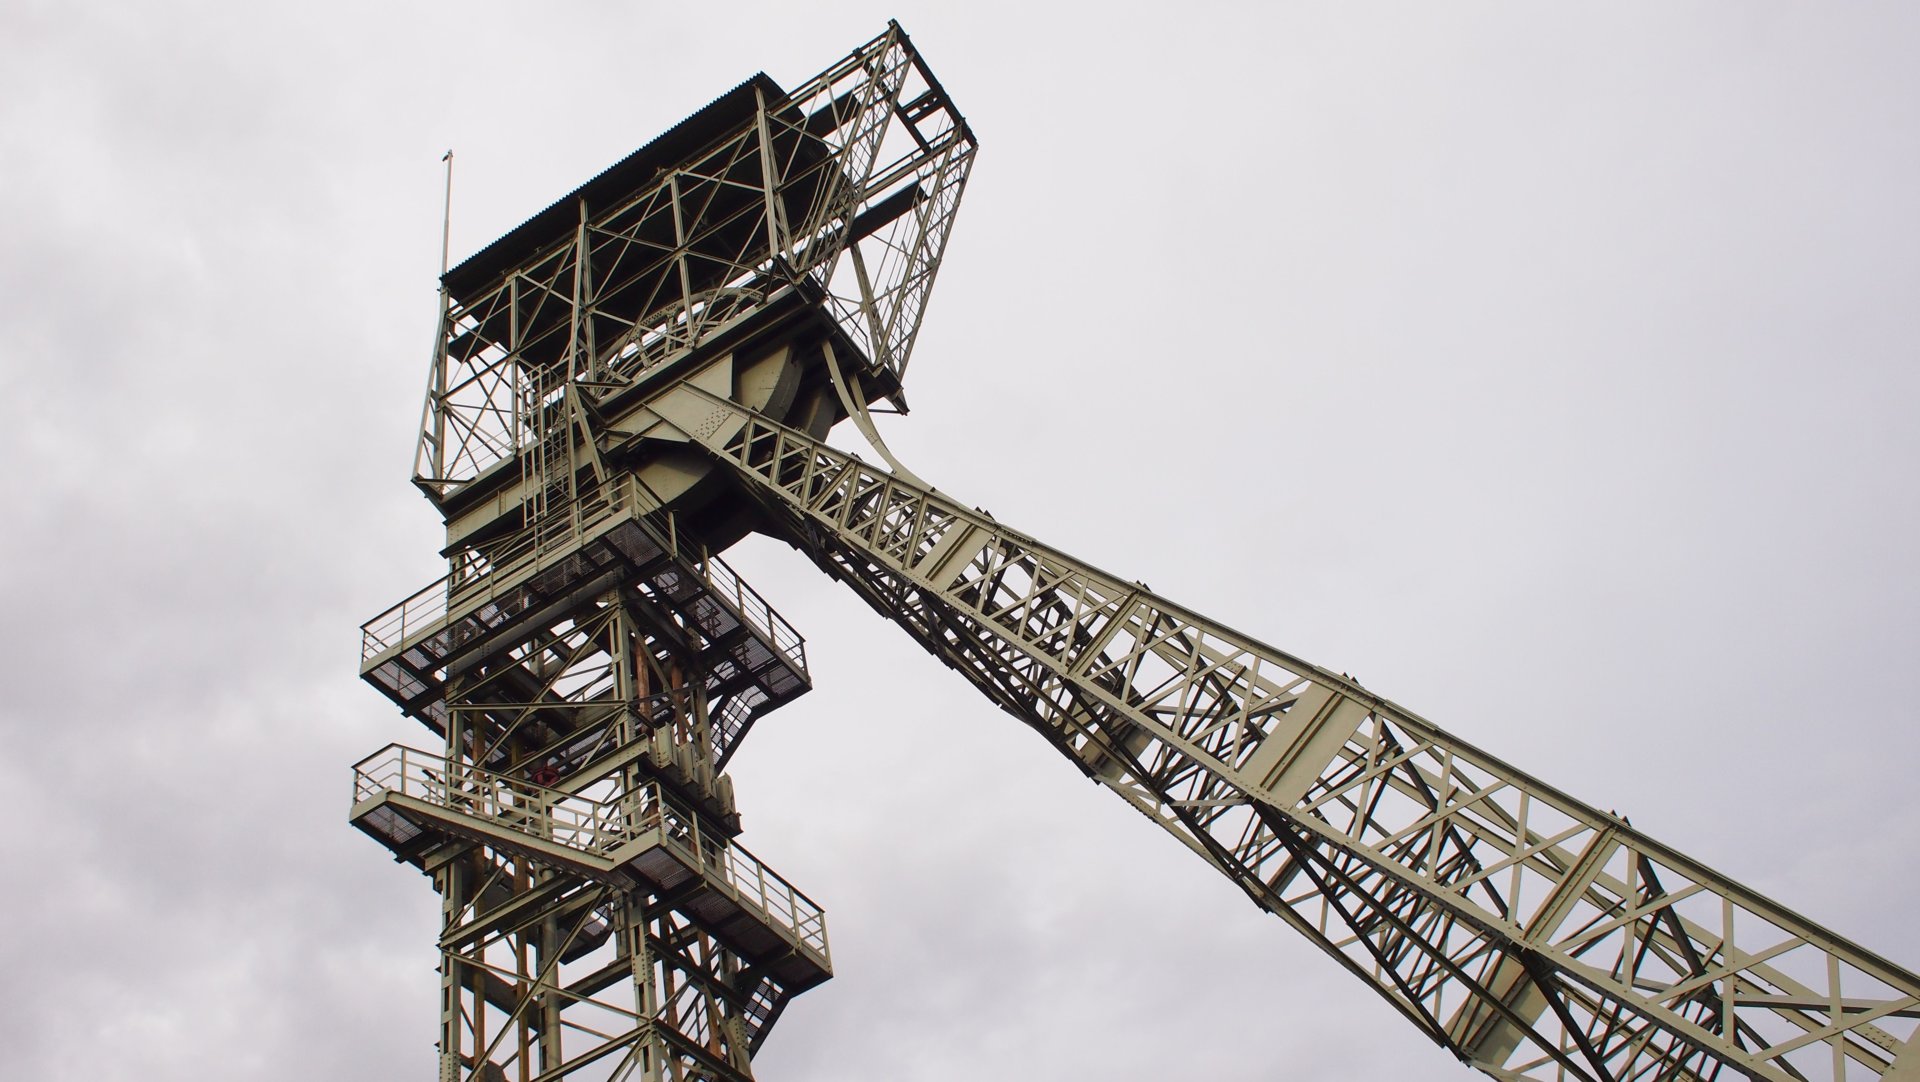 Hoisting tower of a coal mine against grey sky